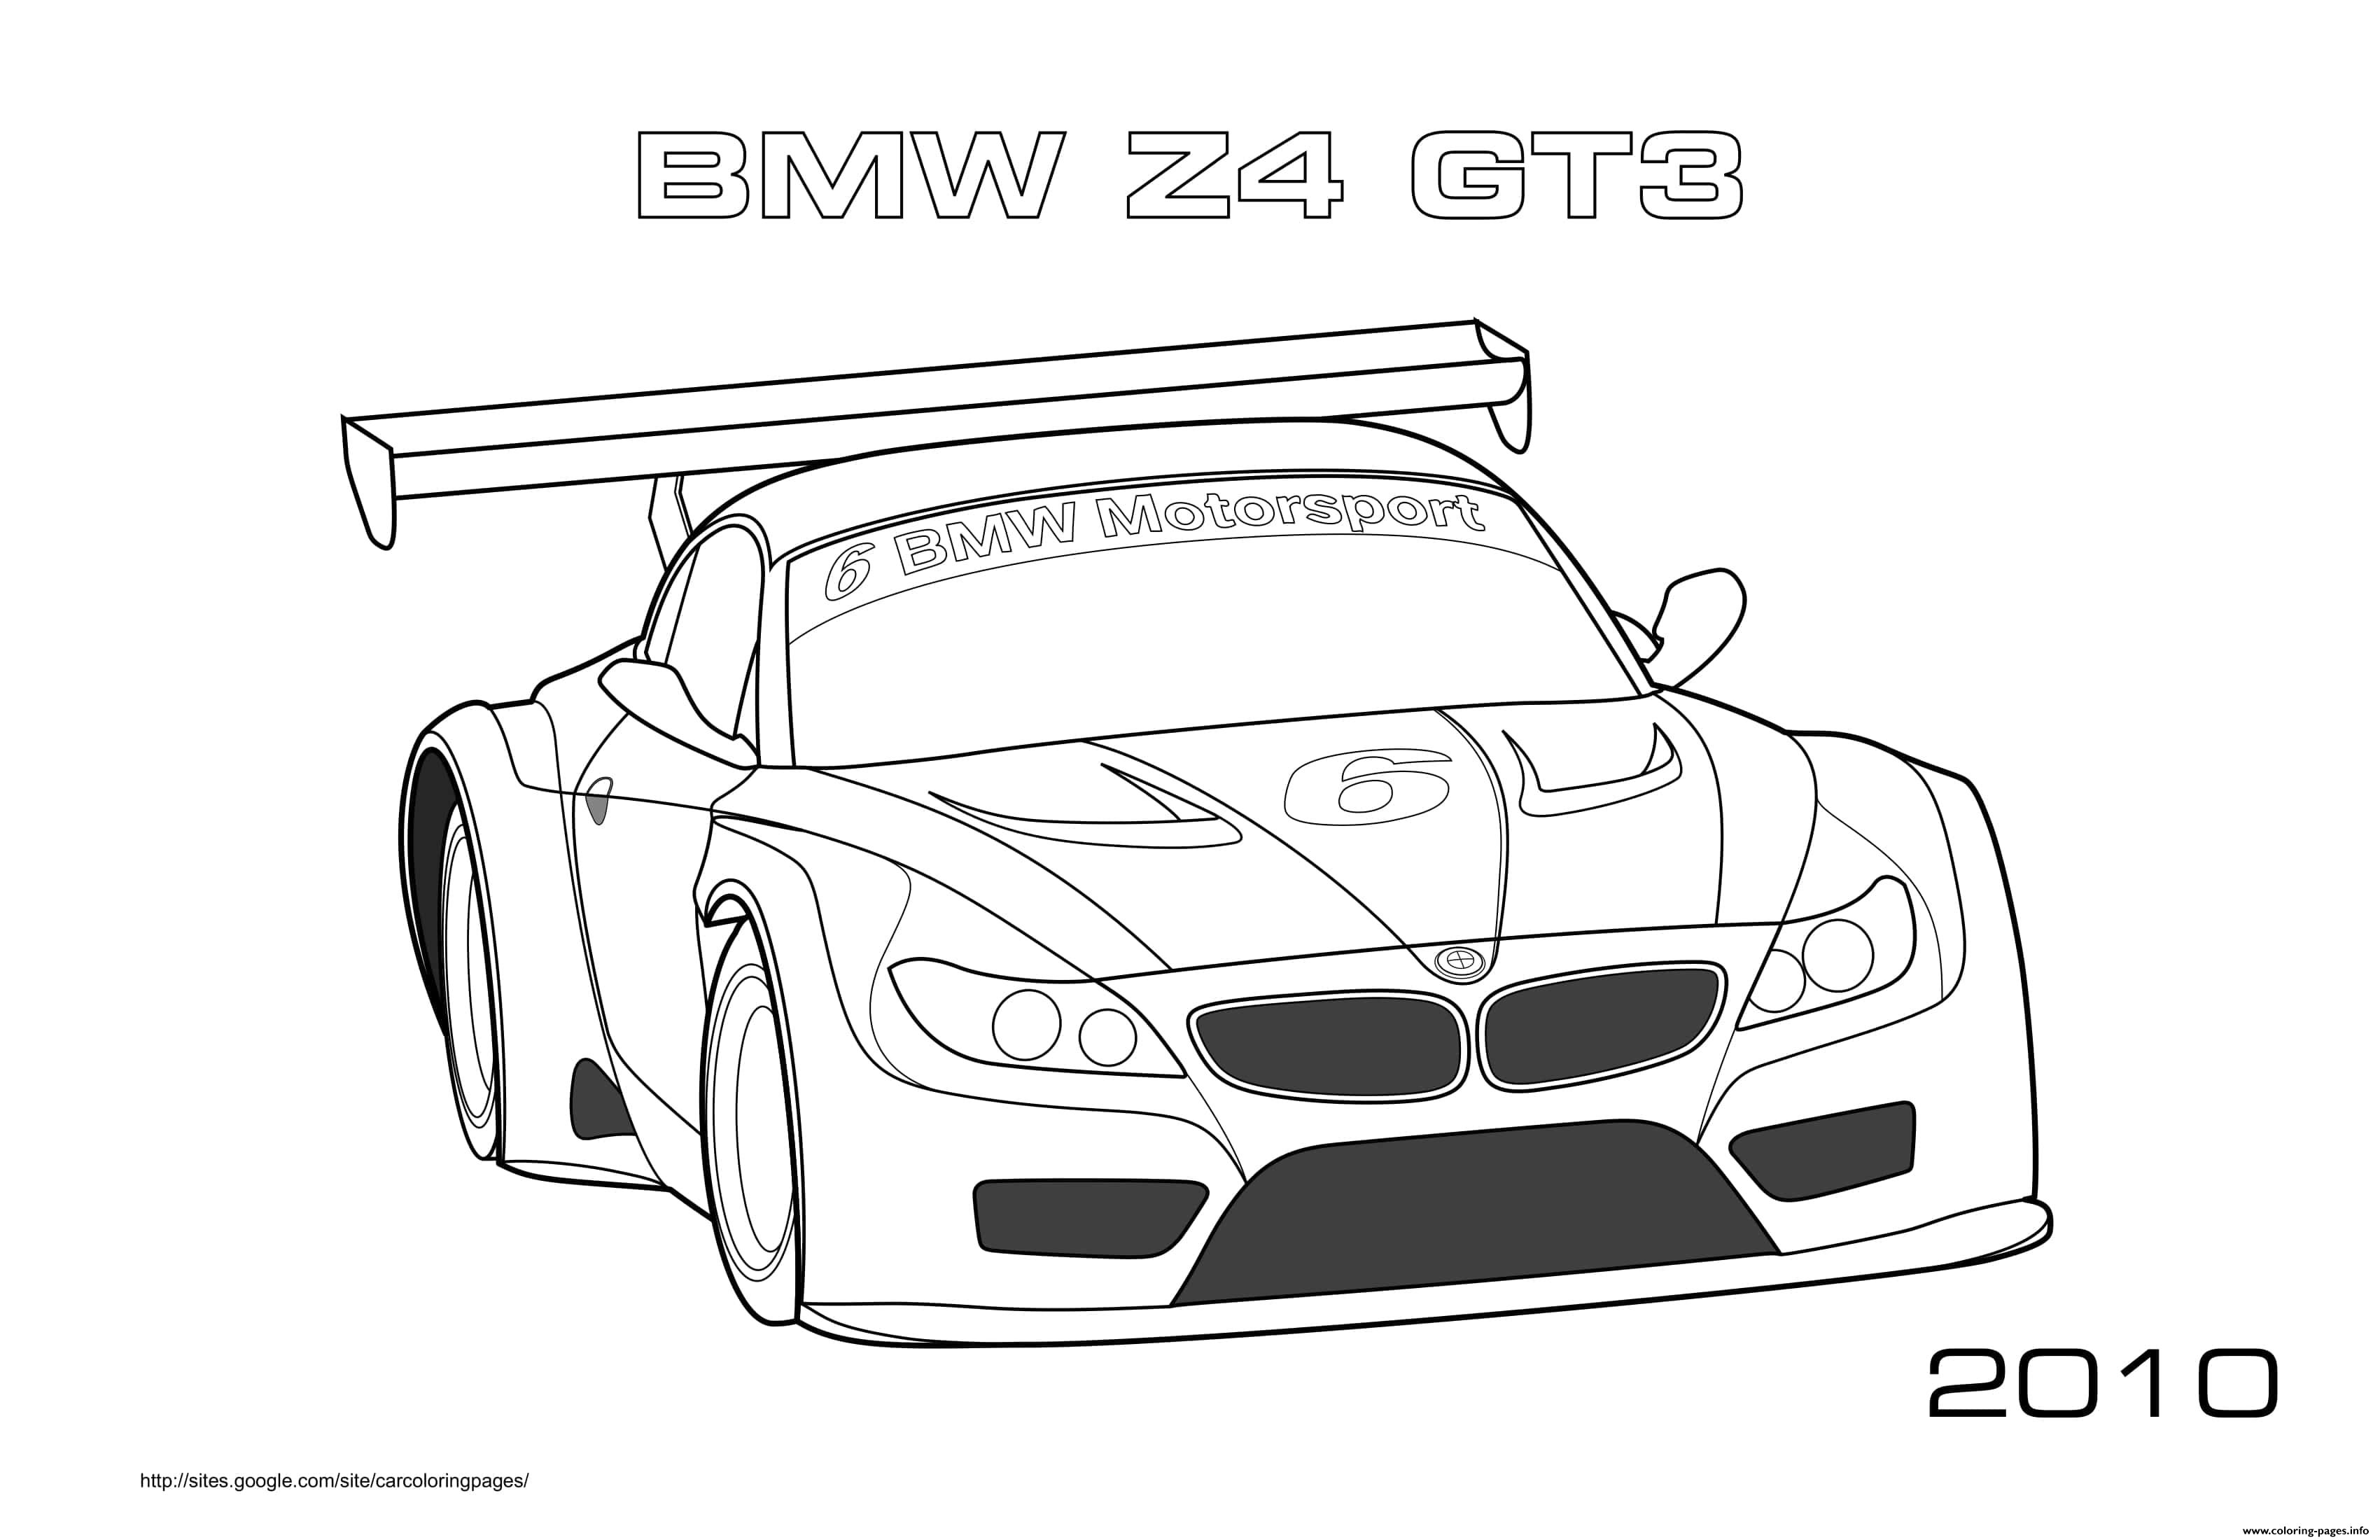 Bmw Z4 Gt3 2010 coloring